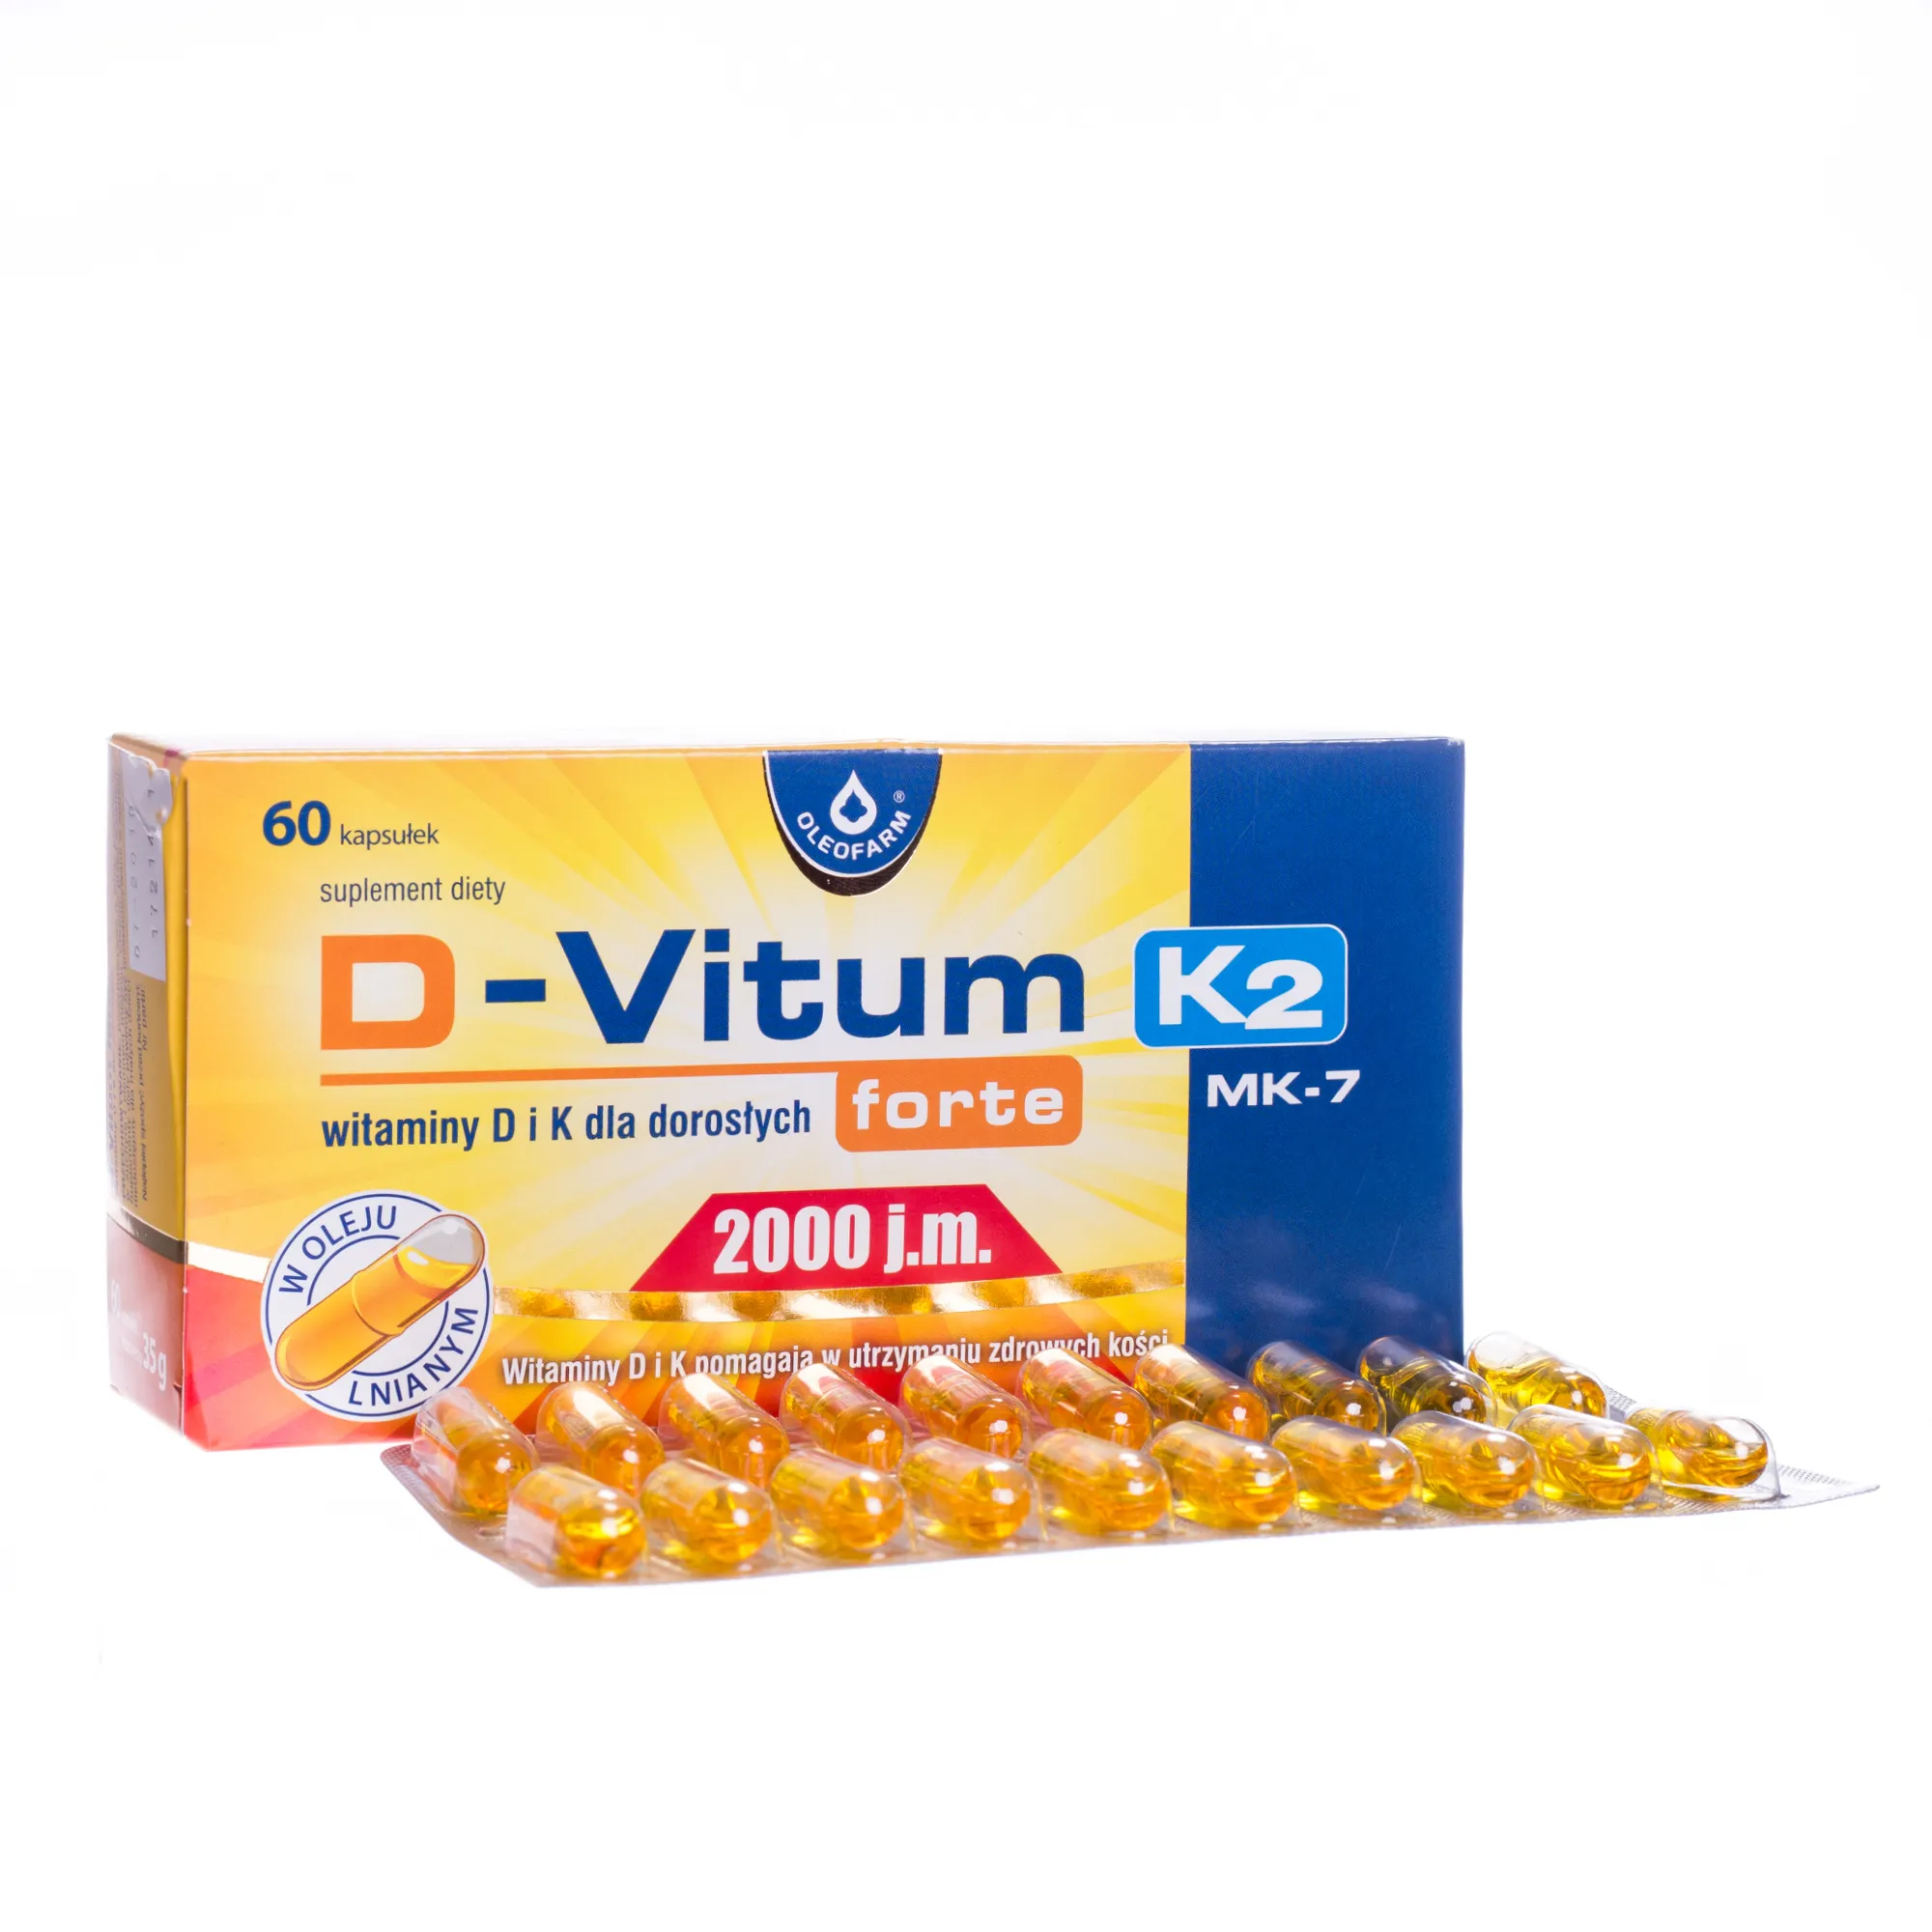 D-Vitum Forte 2000 j.m. K2, suplement diety, 60 kapsułek